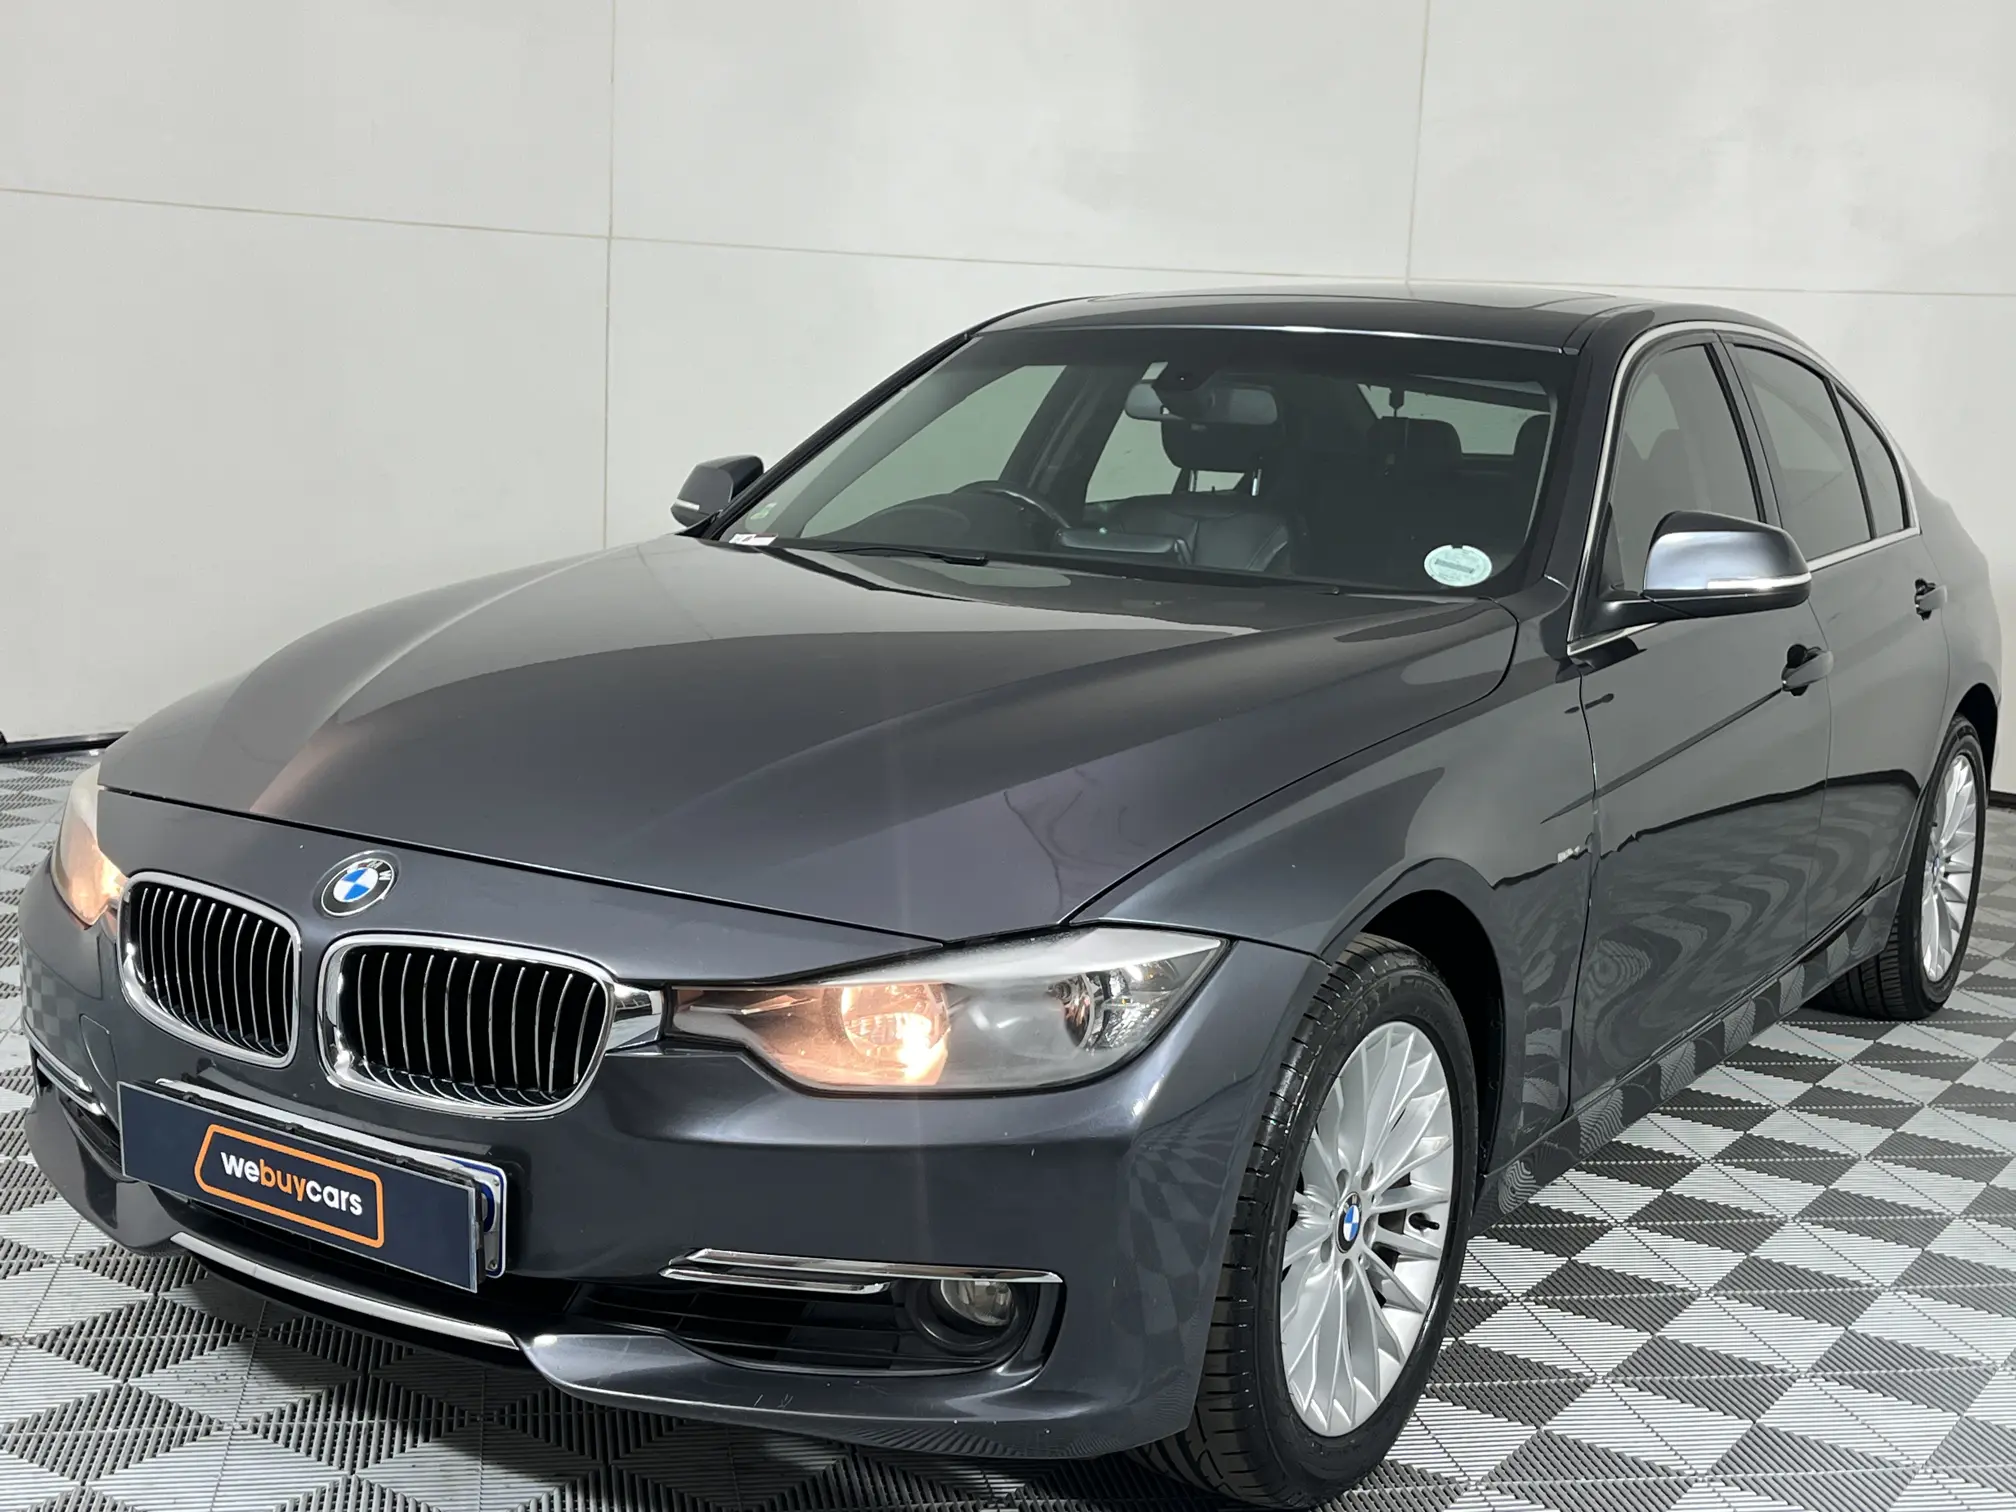 2013 BMW 3 Series 320i Luxury Line (F30)